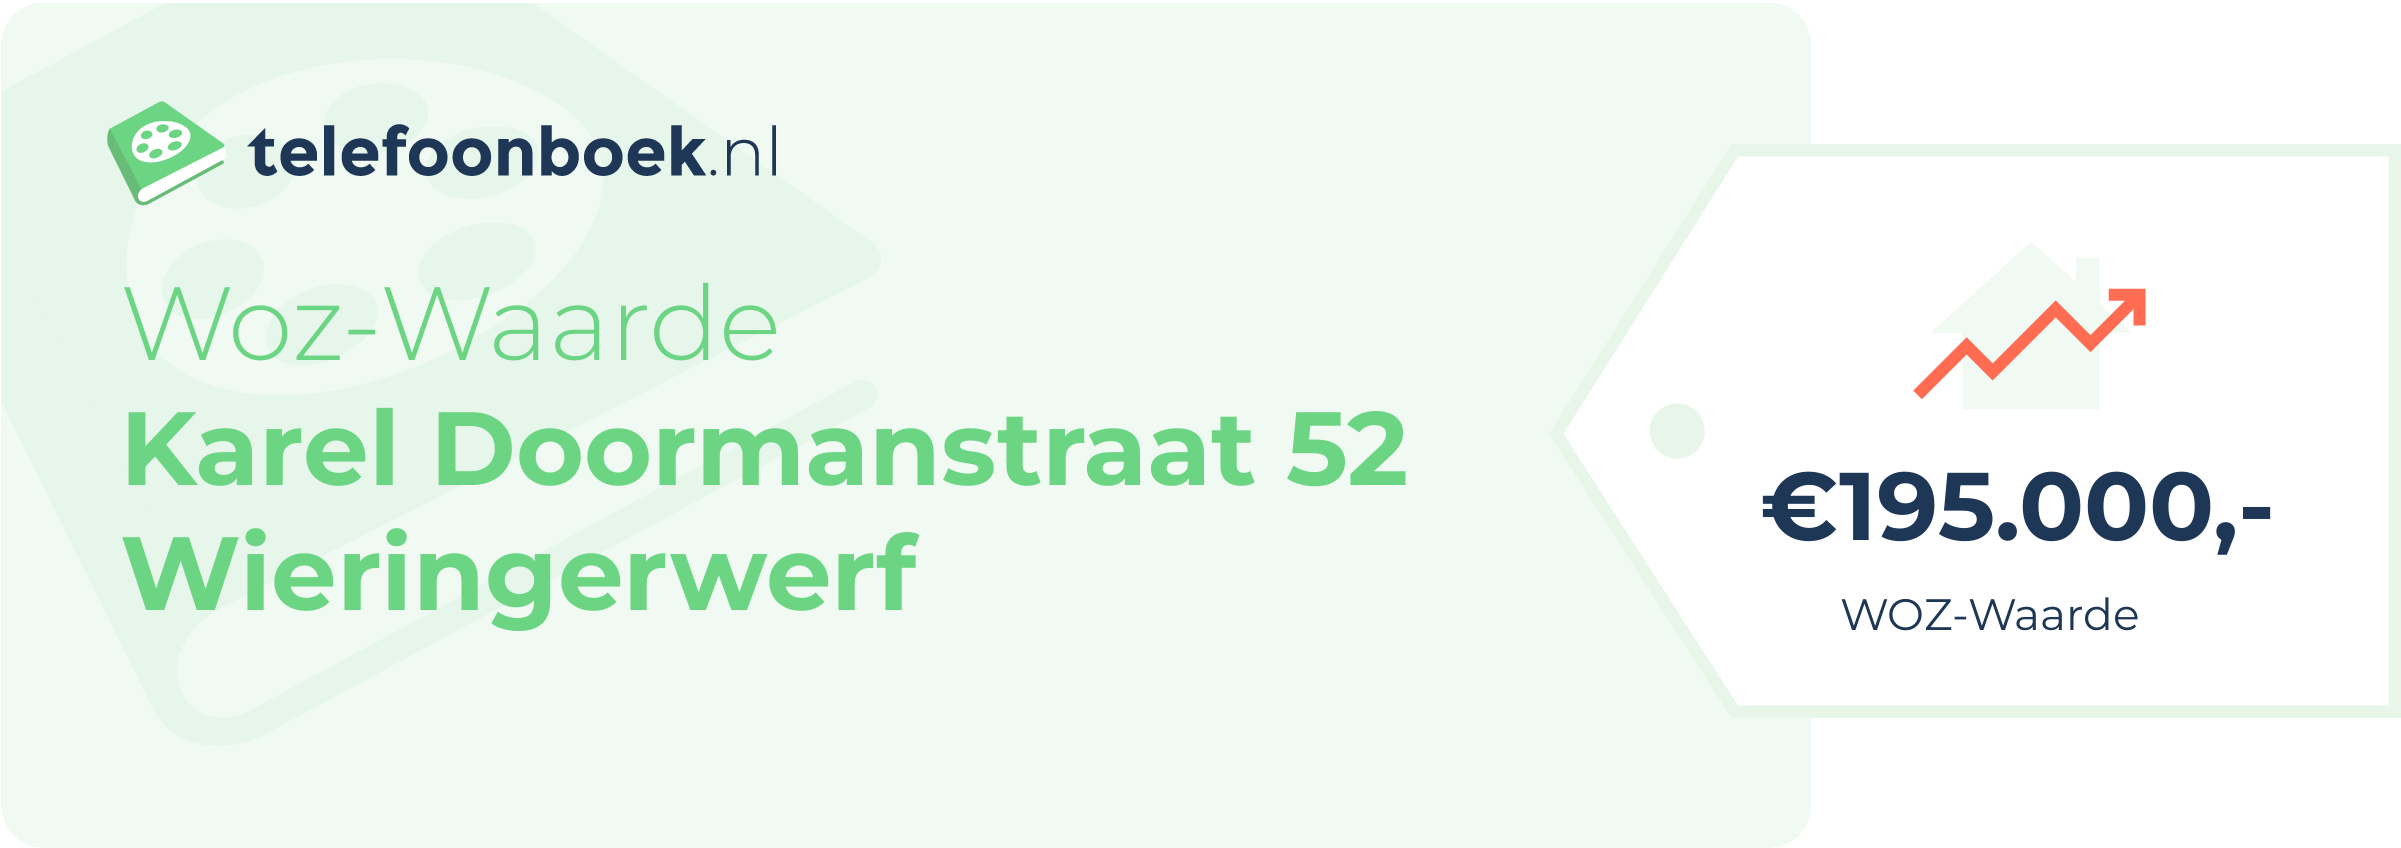 WOZ-waarde Karel Doormanstraat 52 Wieringerwerf